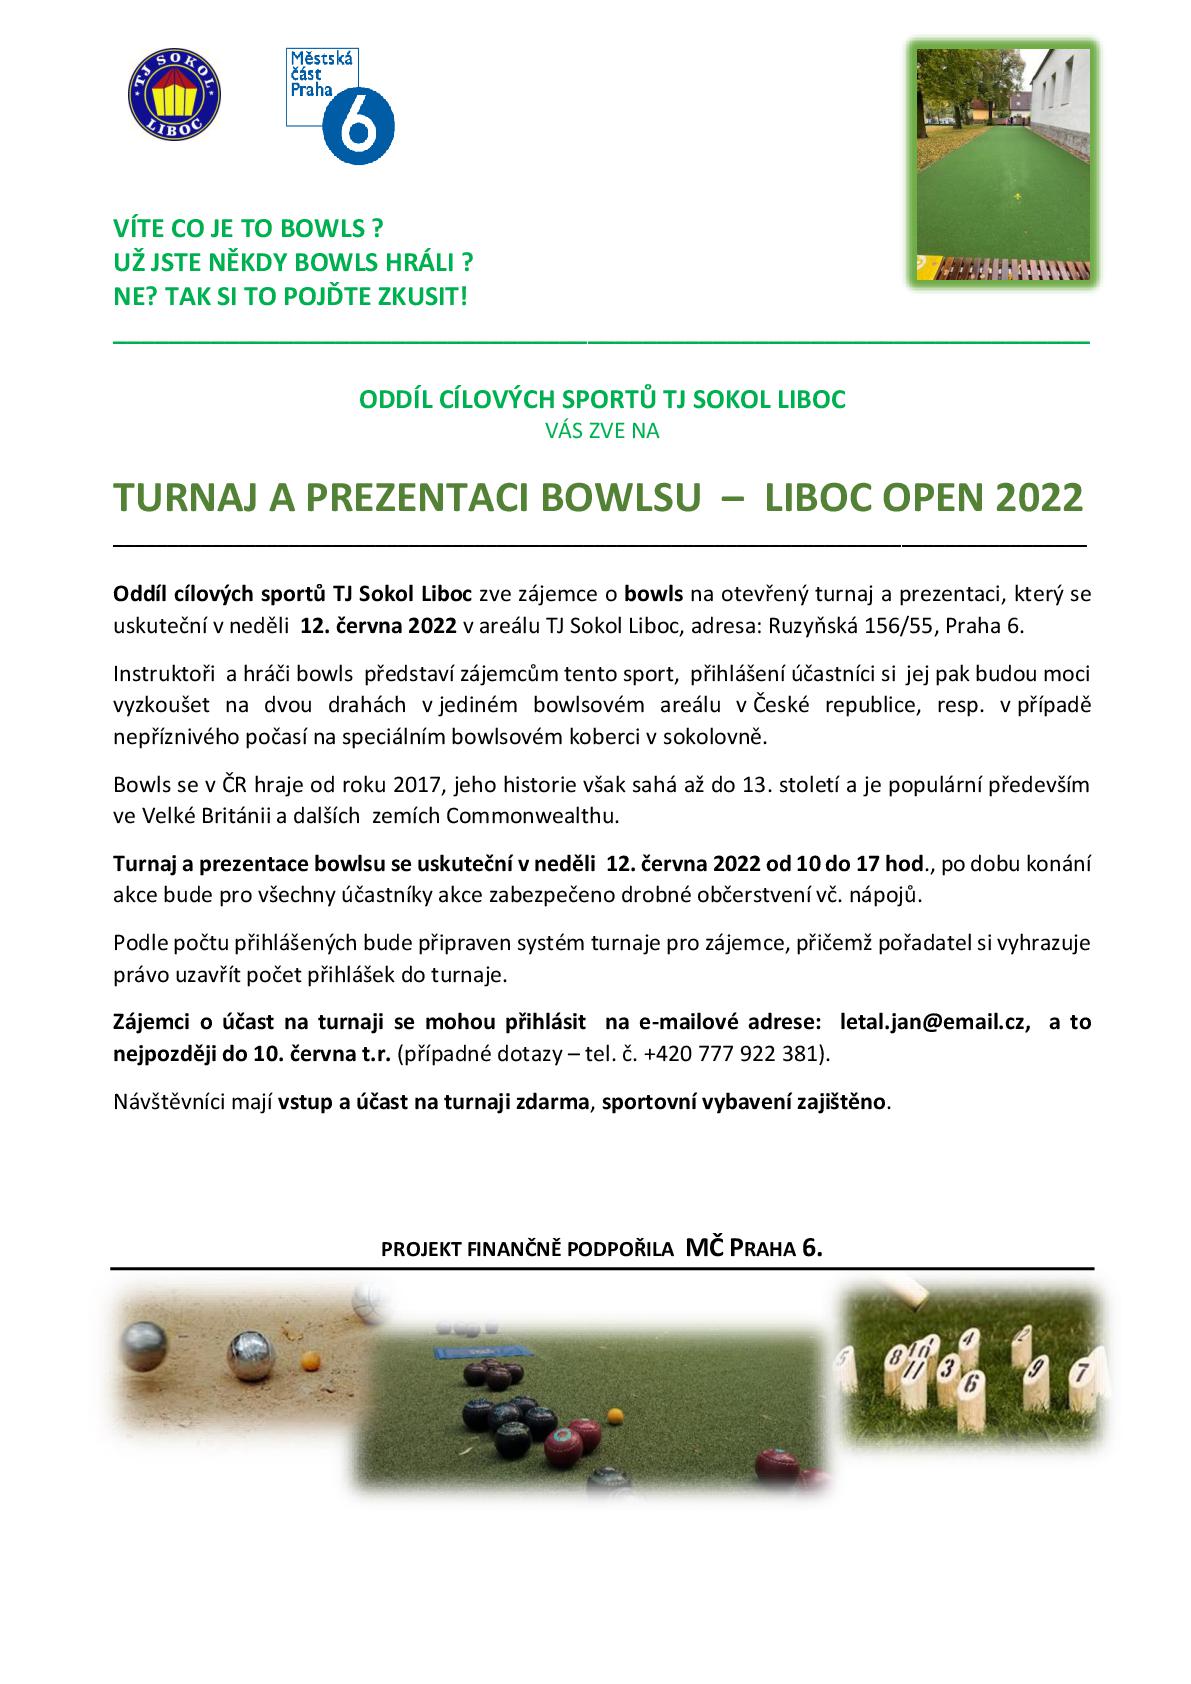 Pozvanka_Turnaj_Liboc_open_2020-001